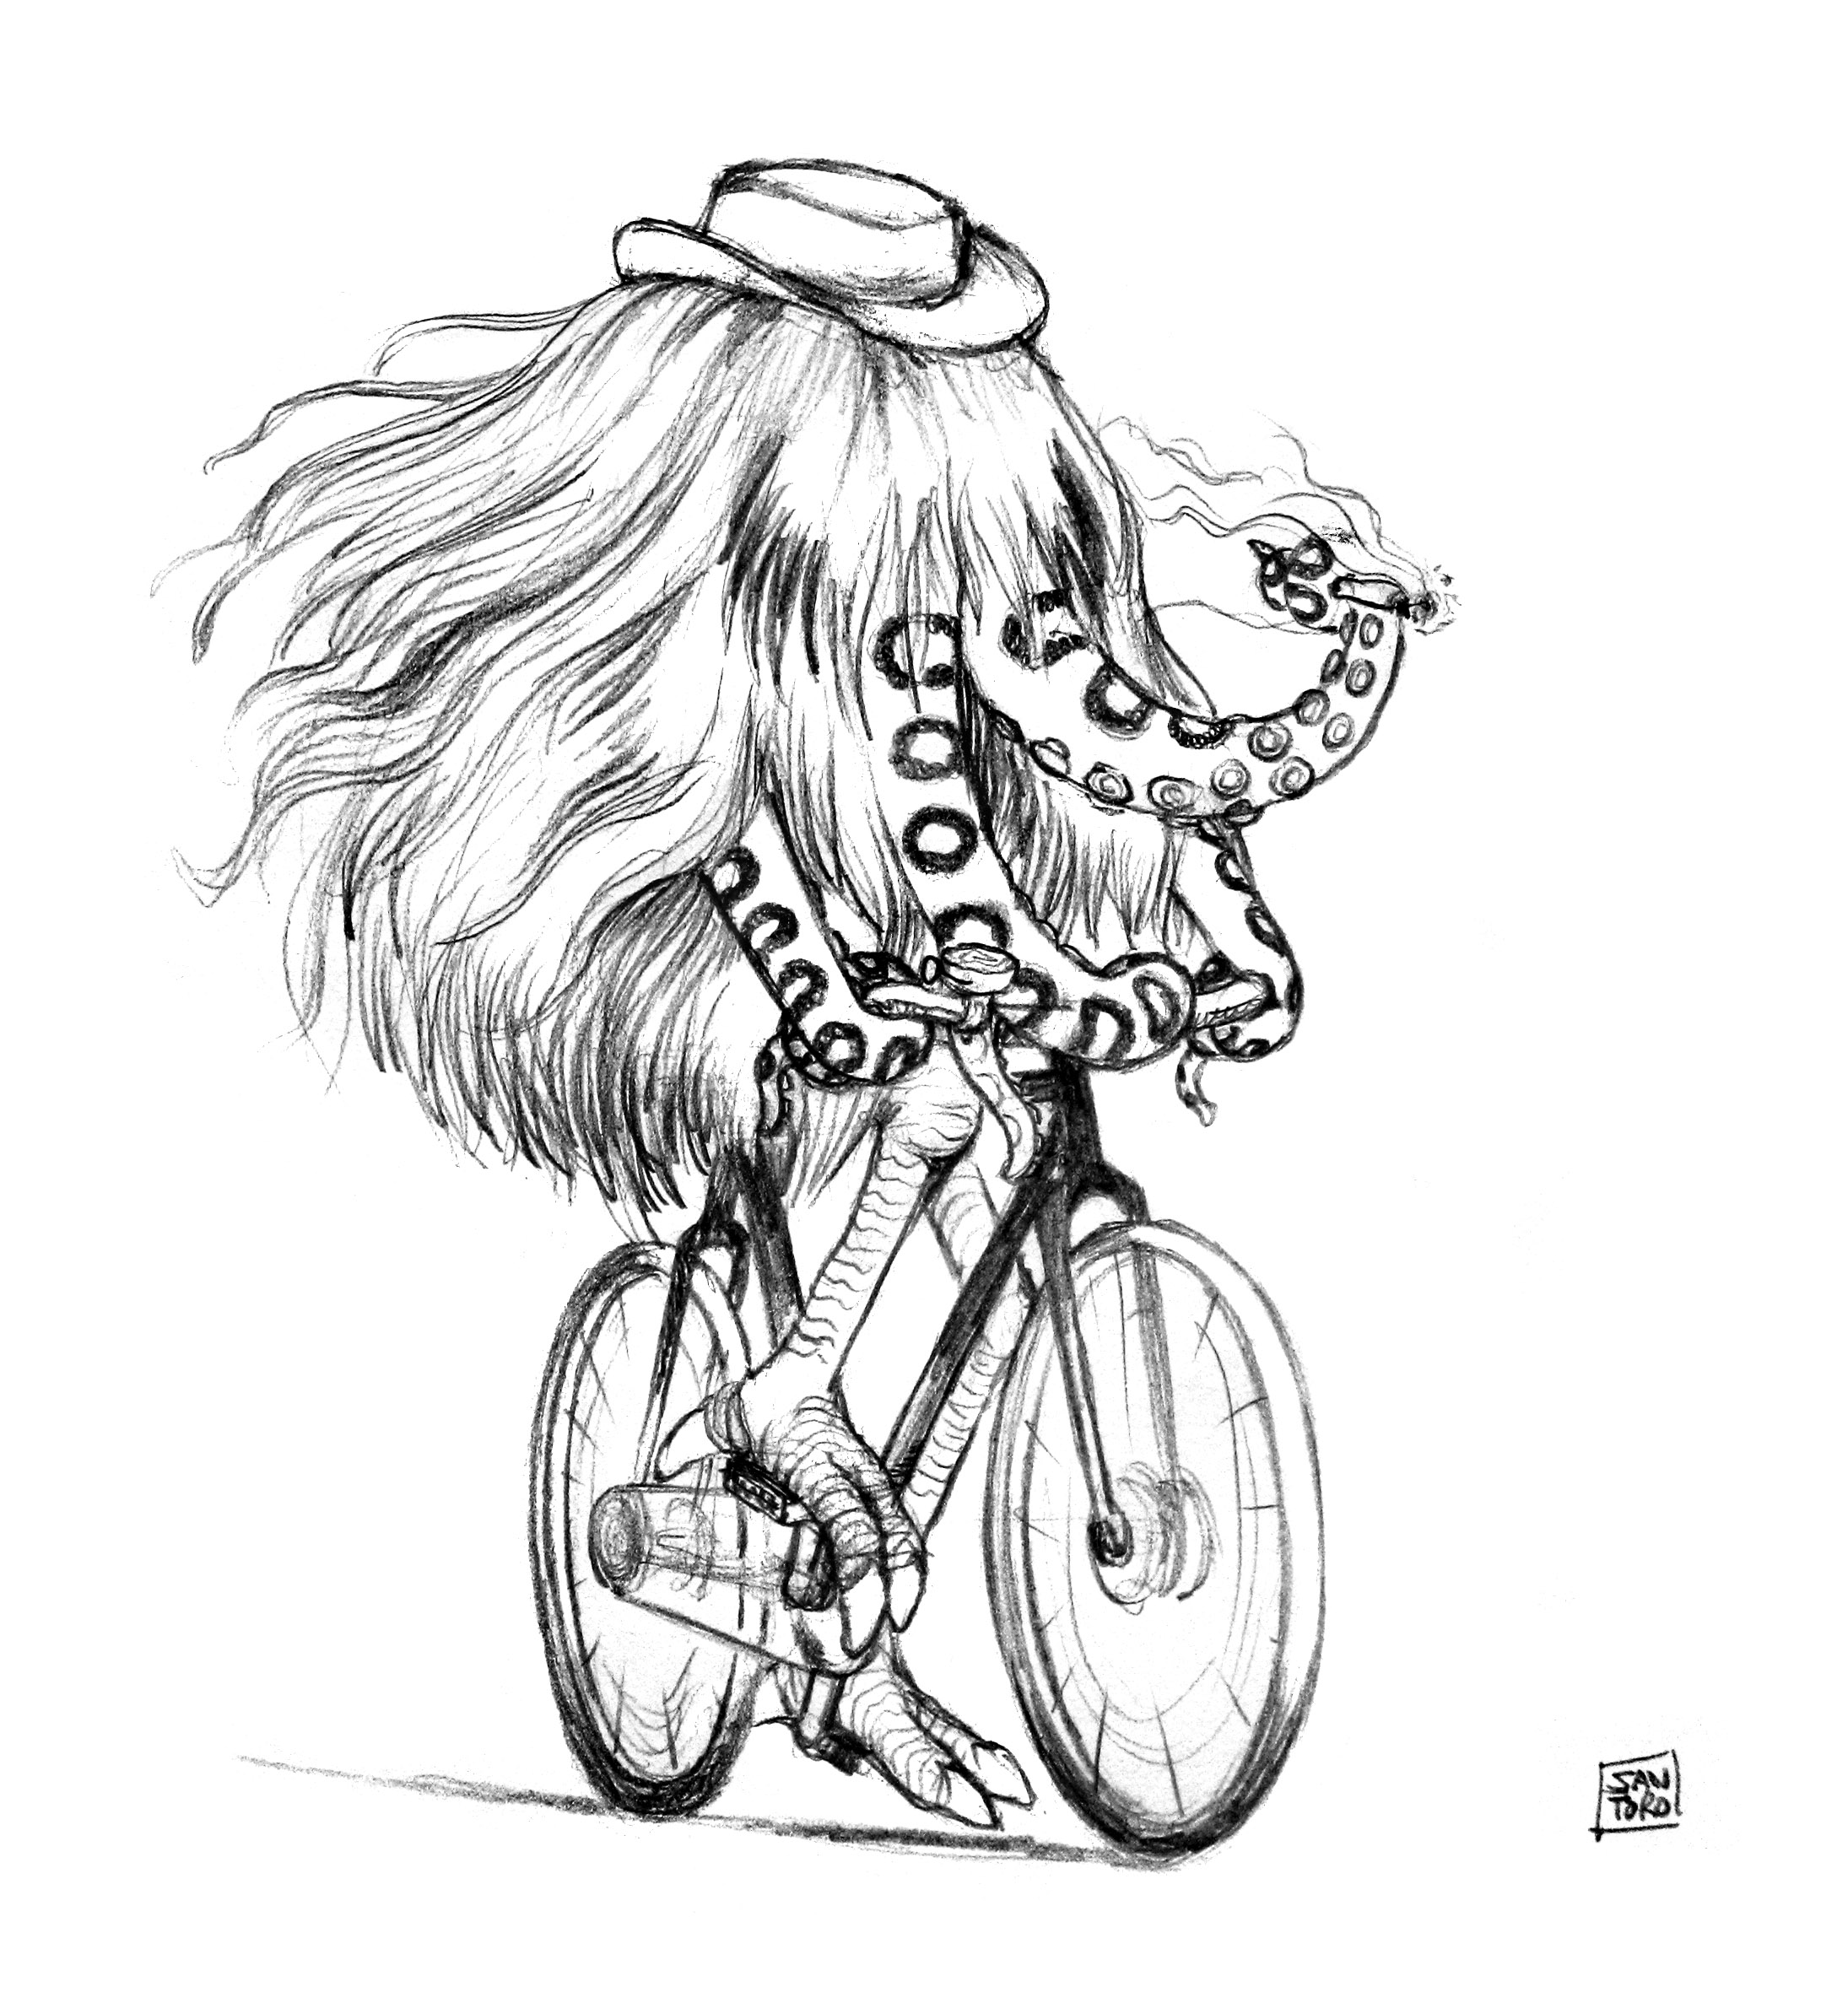 Bicycle Pencil Drawing at GetDrawings Free download